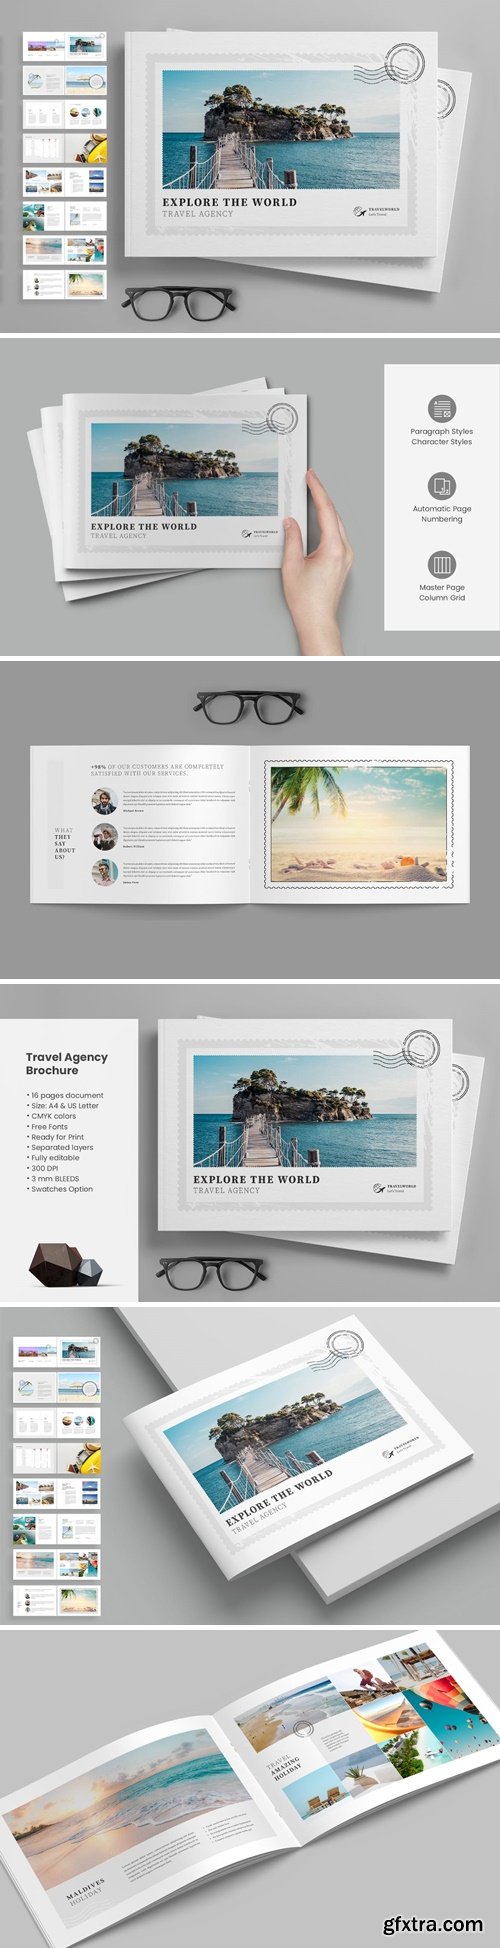 Travel Agency Brochure 56MJEK7